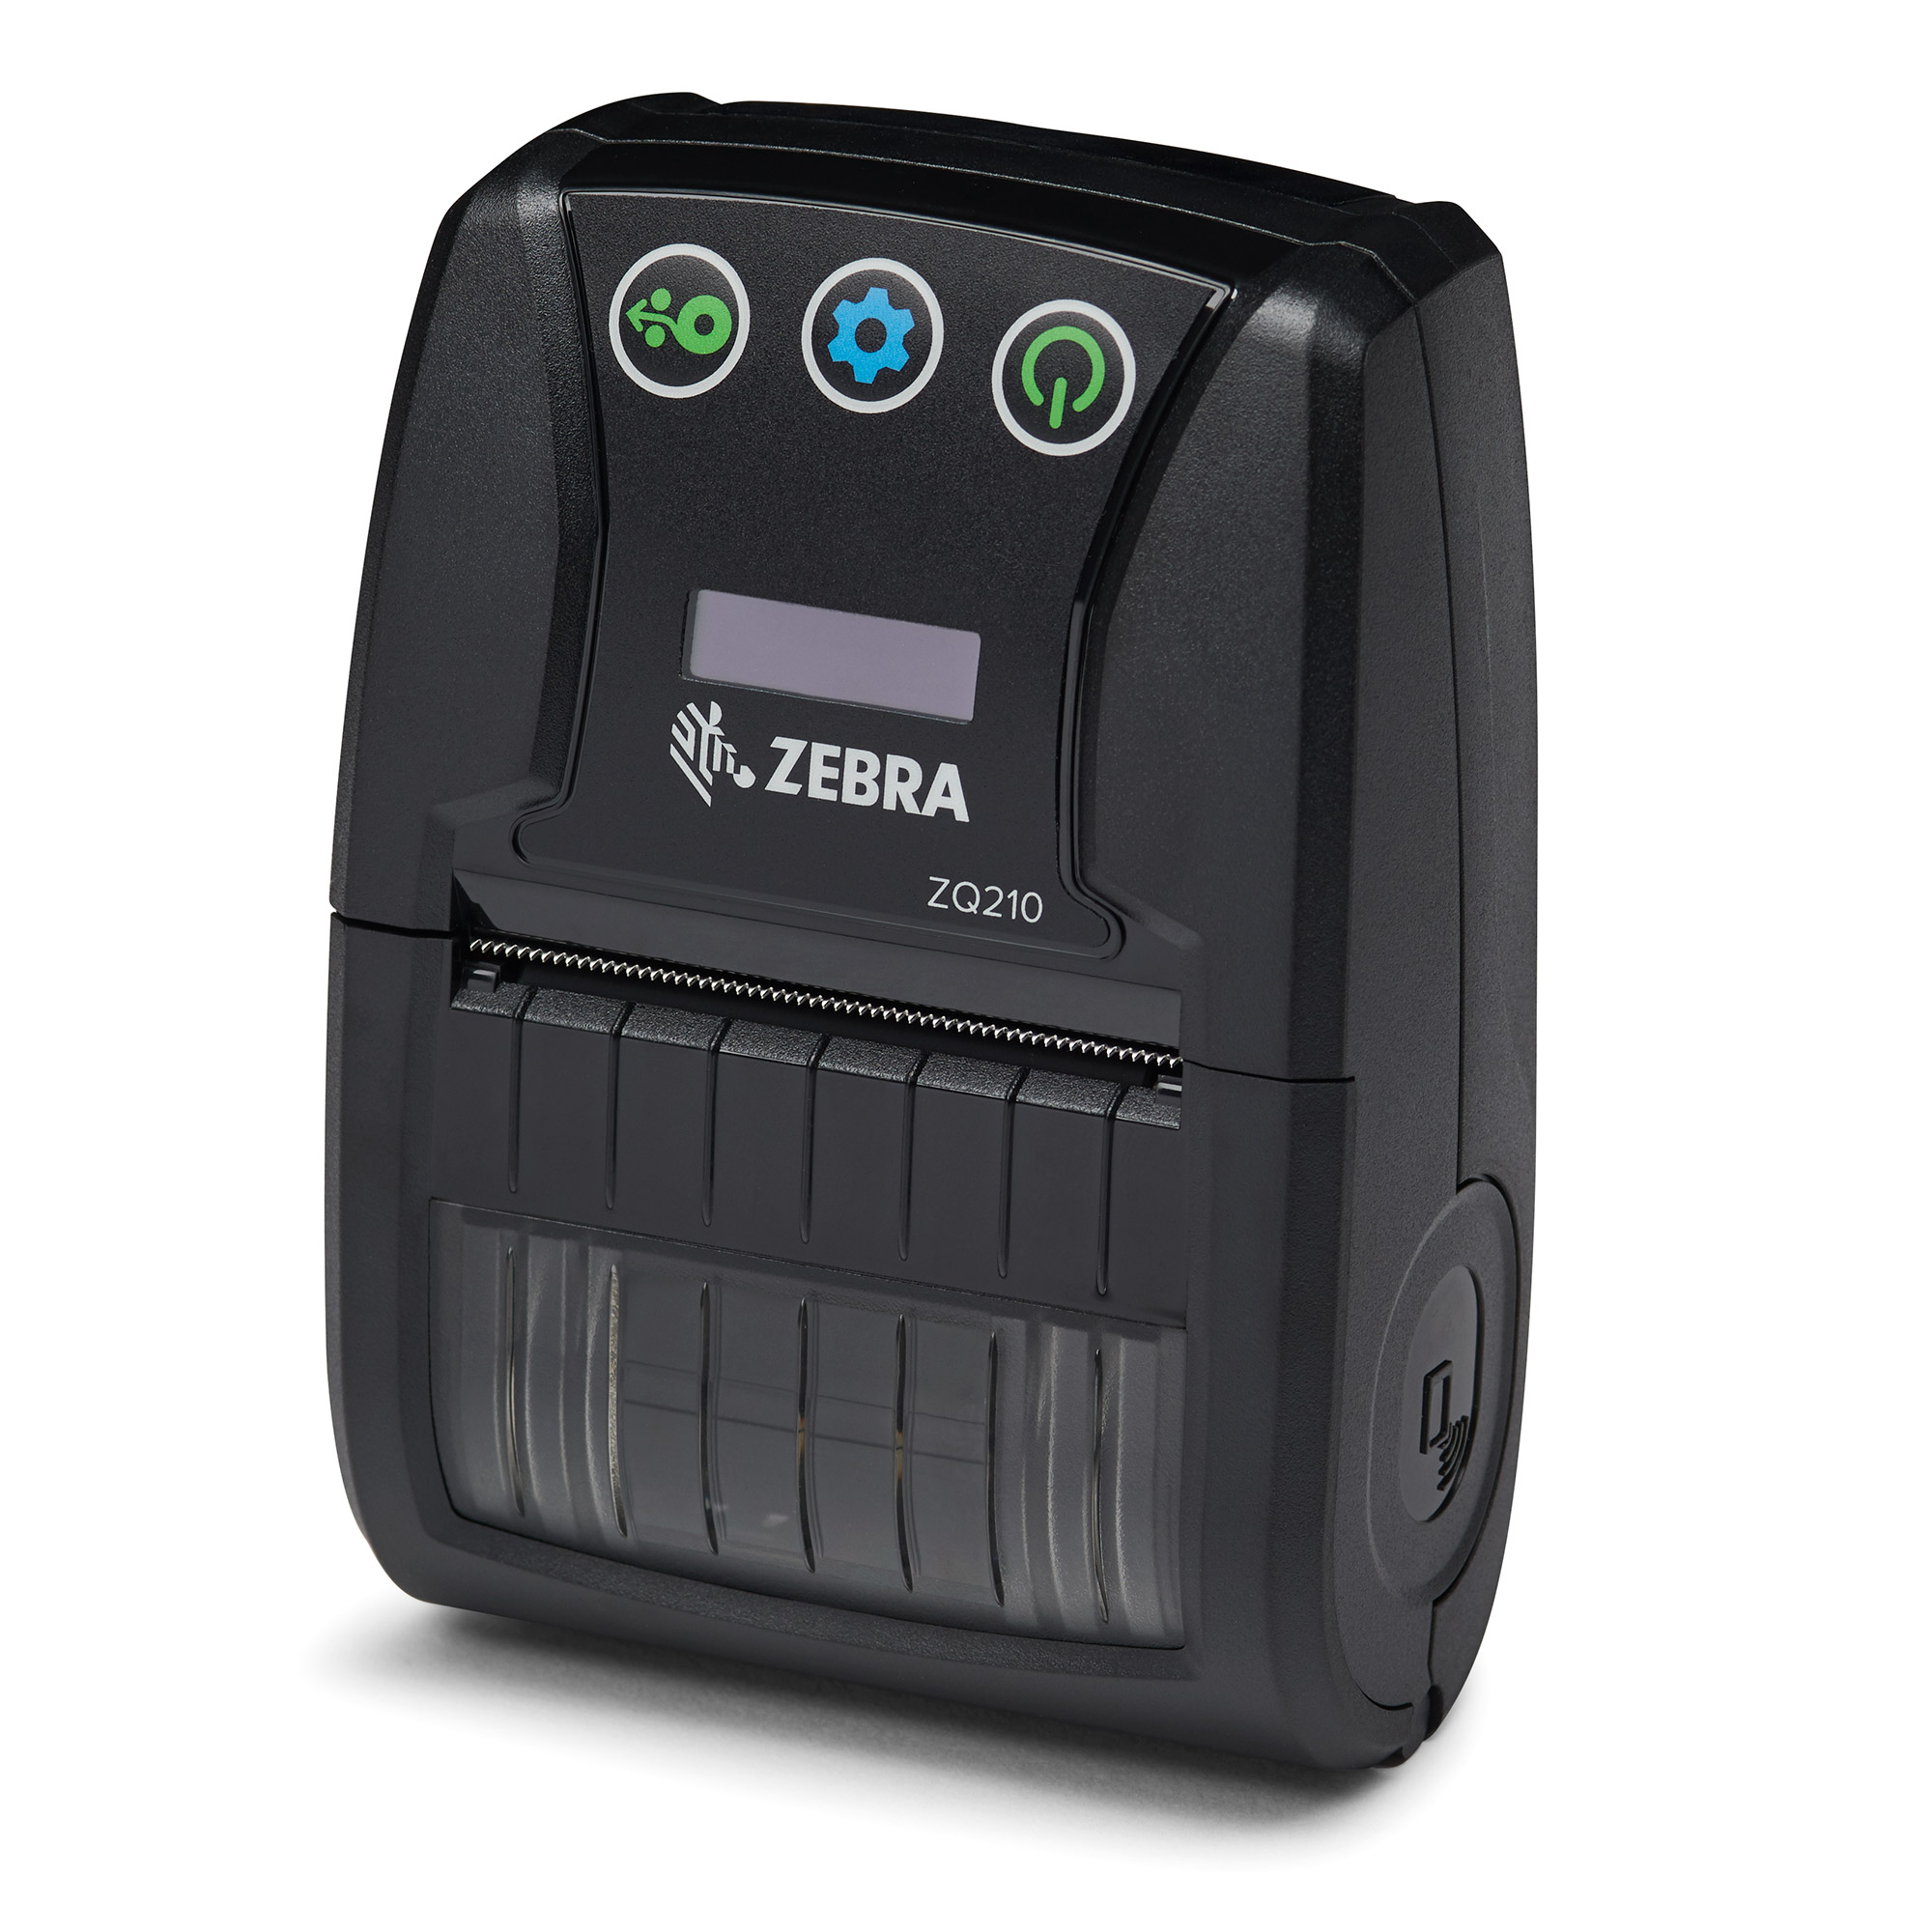 Ct Onlinemx Zebra Impresora Portatil Papel Recibo Zq210 Bt 58mm 5997